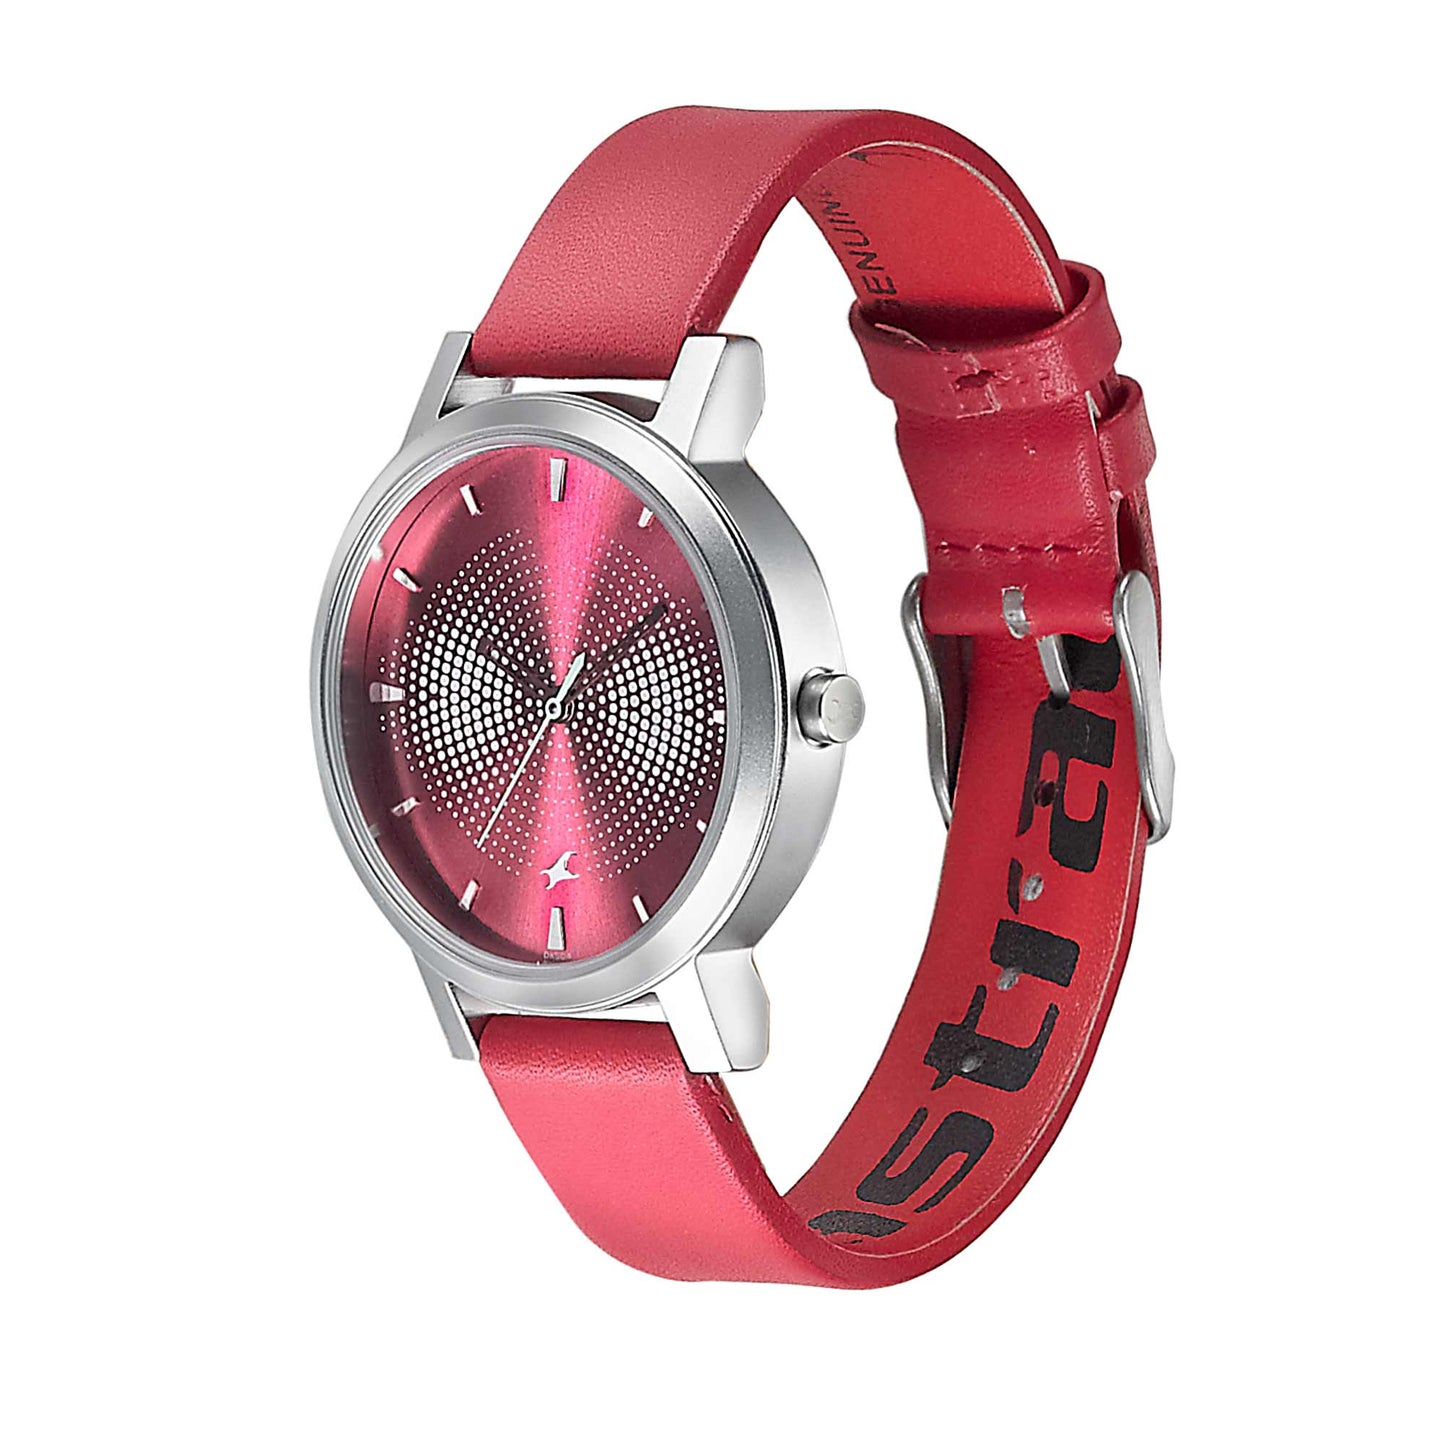 Fastrack Sunburn Quartz Analog Pink Dial Leather Strap Watch for Girls